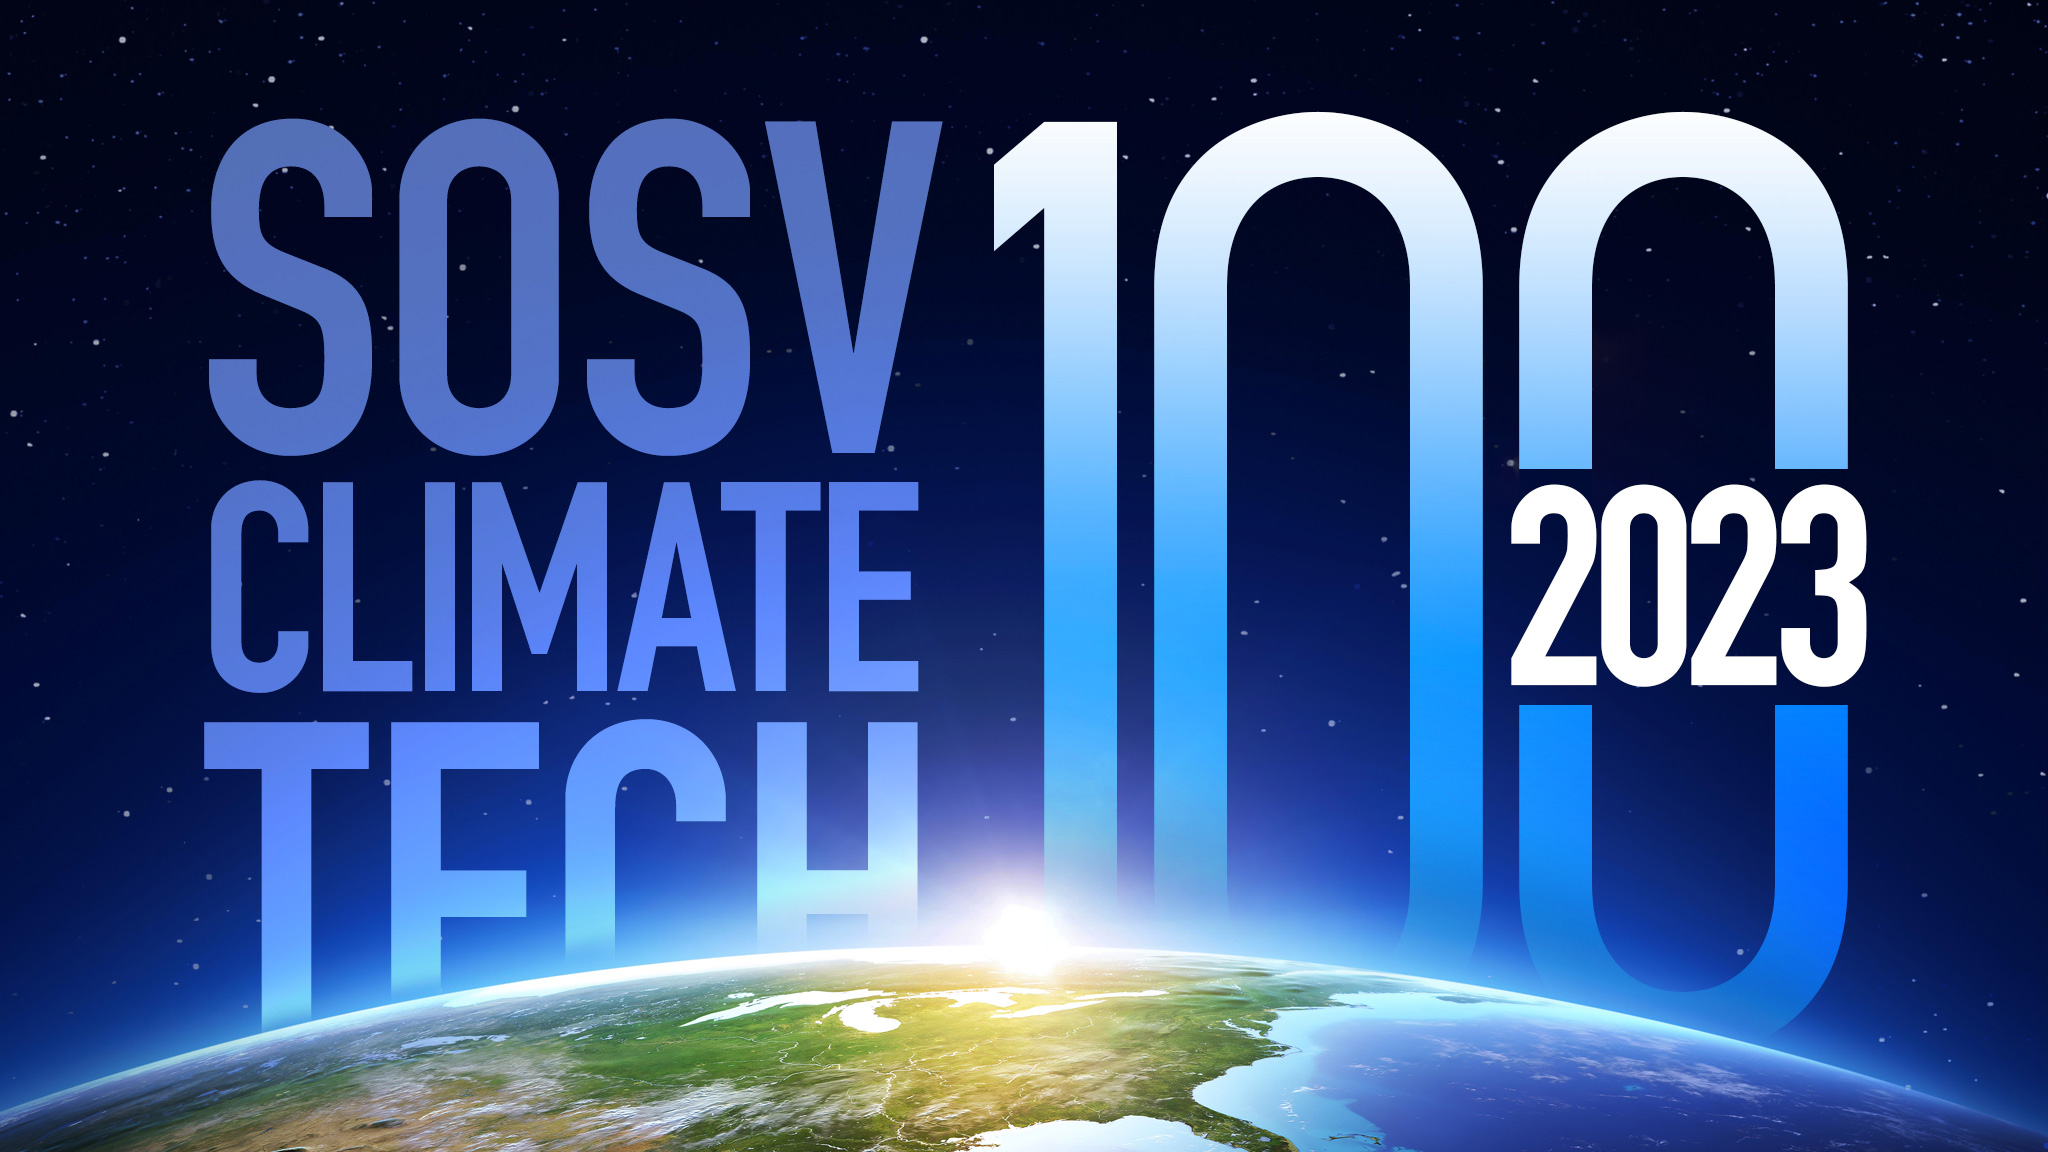 SOSV Climate Tech Summit